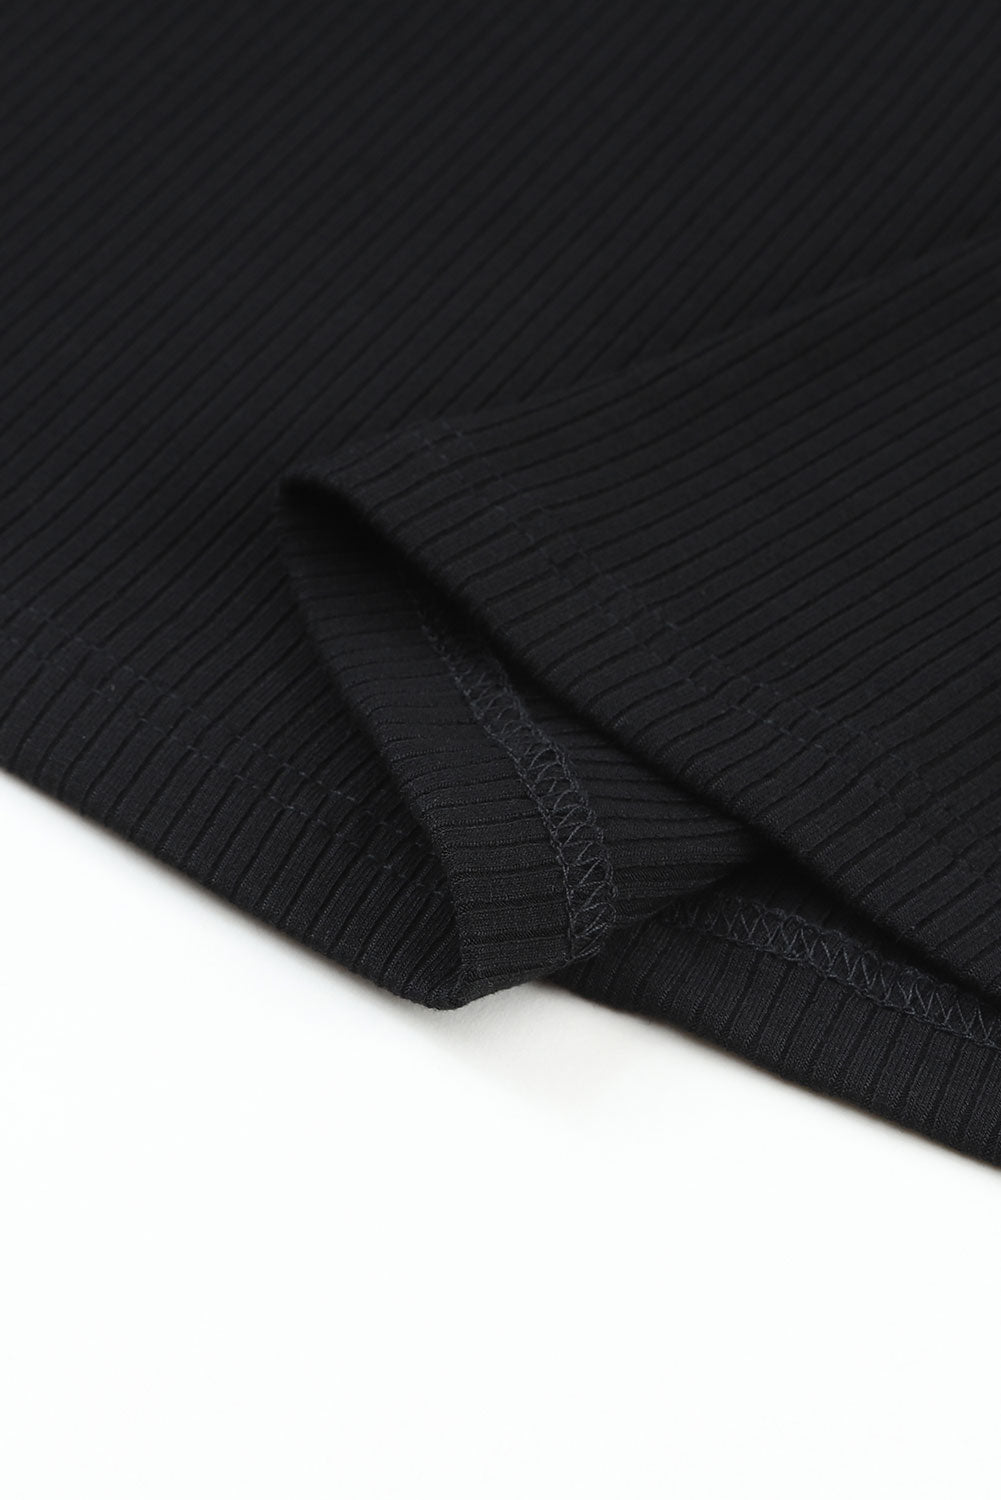 Black Striped Mesh Long Sleeve Crewneck Ribbed Top